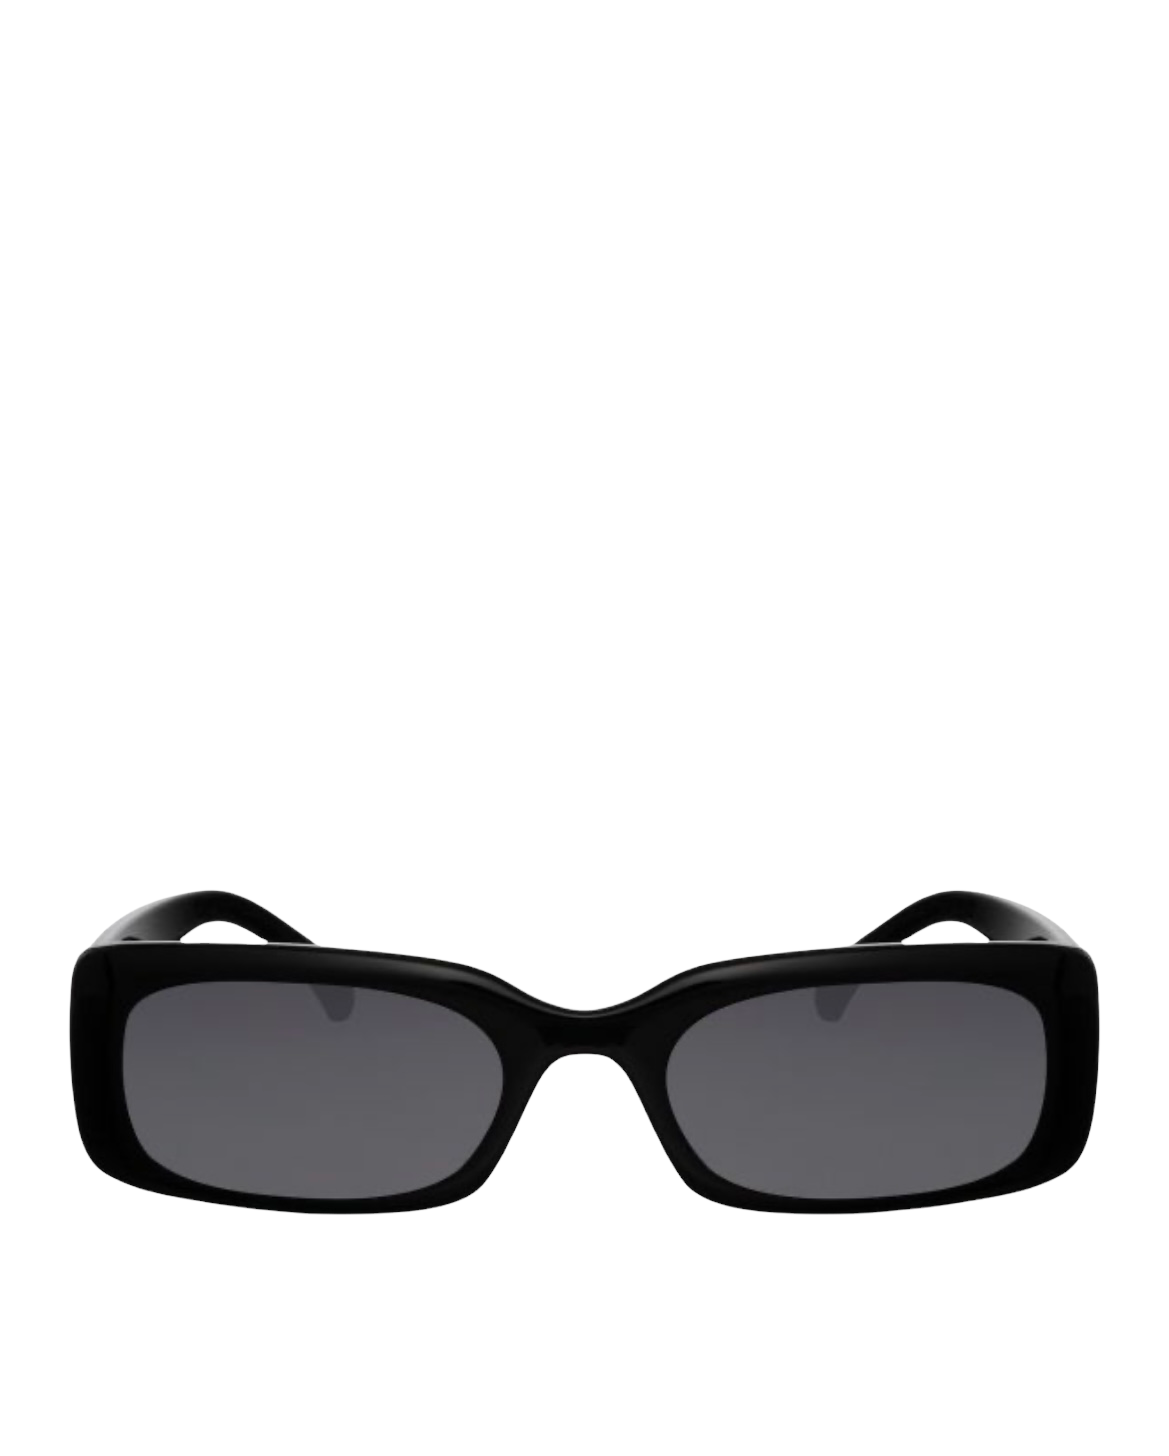 Sunglasses - Eco Black